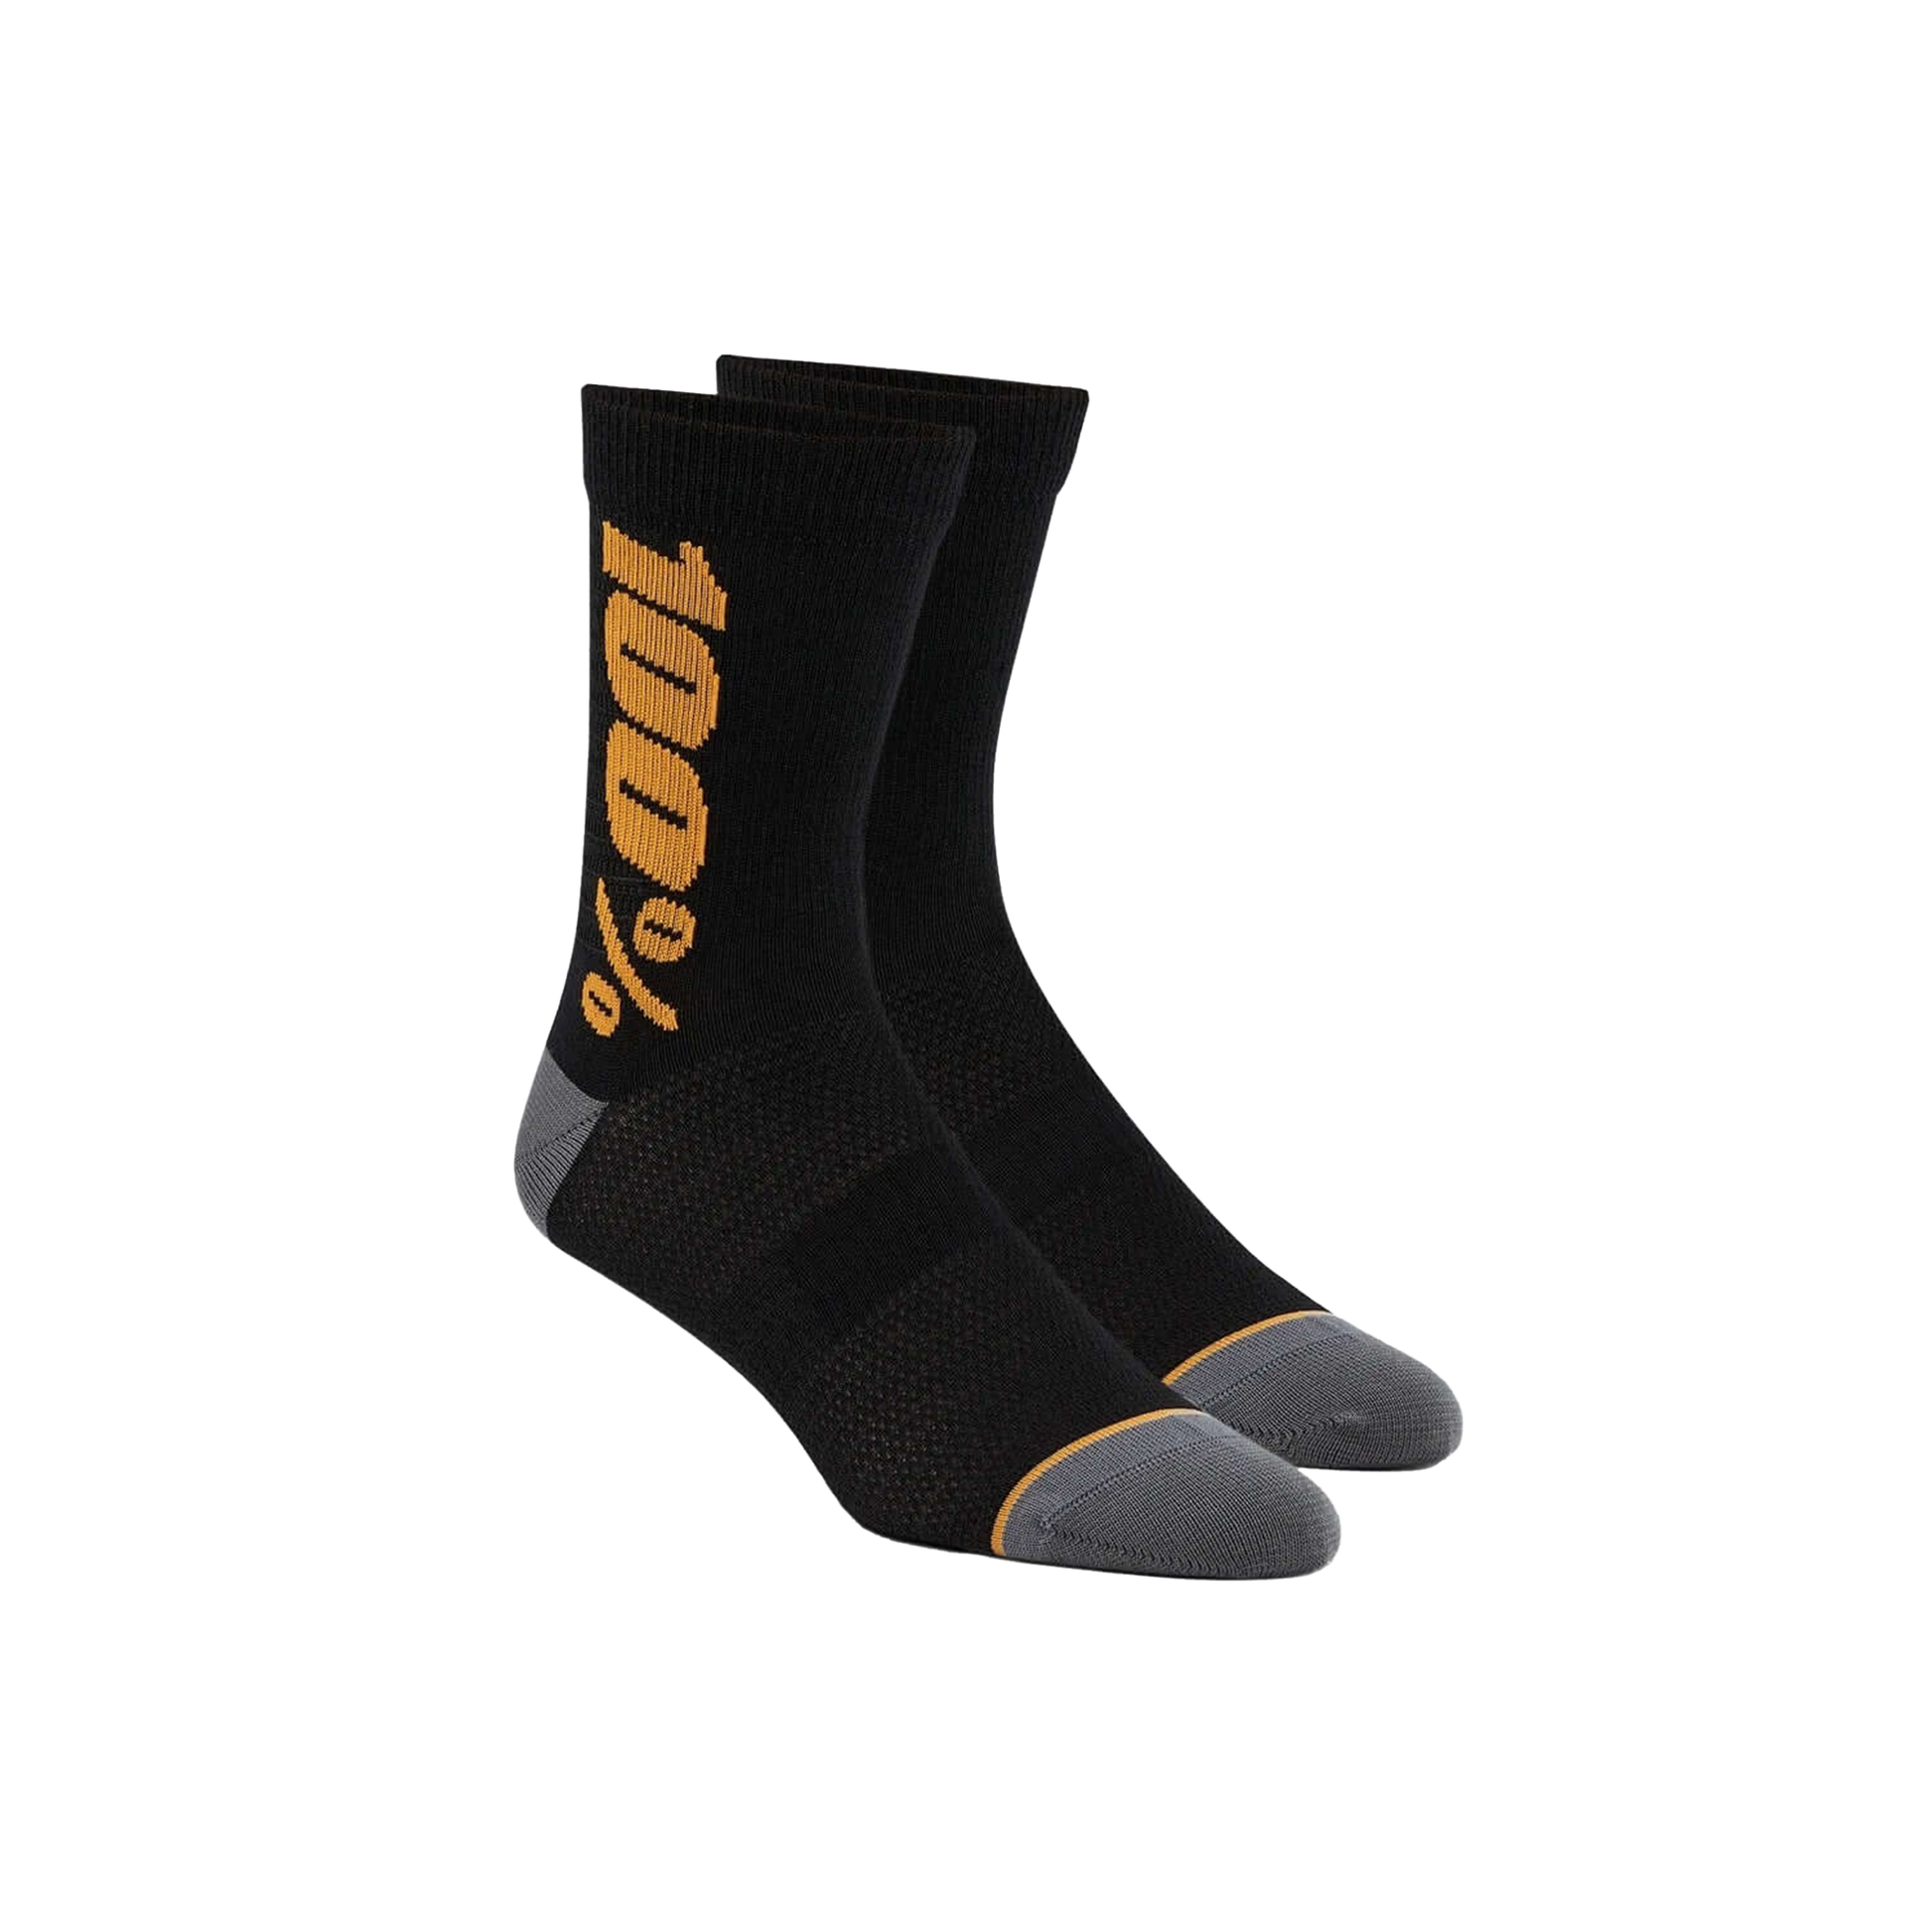 100% Rythym Merino Wool Performance Socks Black Bronze Bike Socks